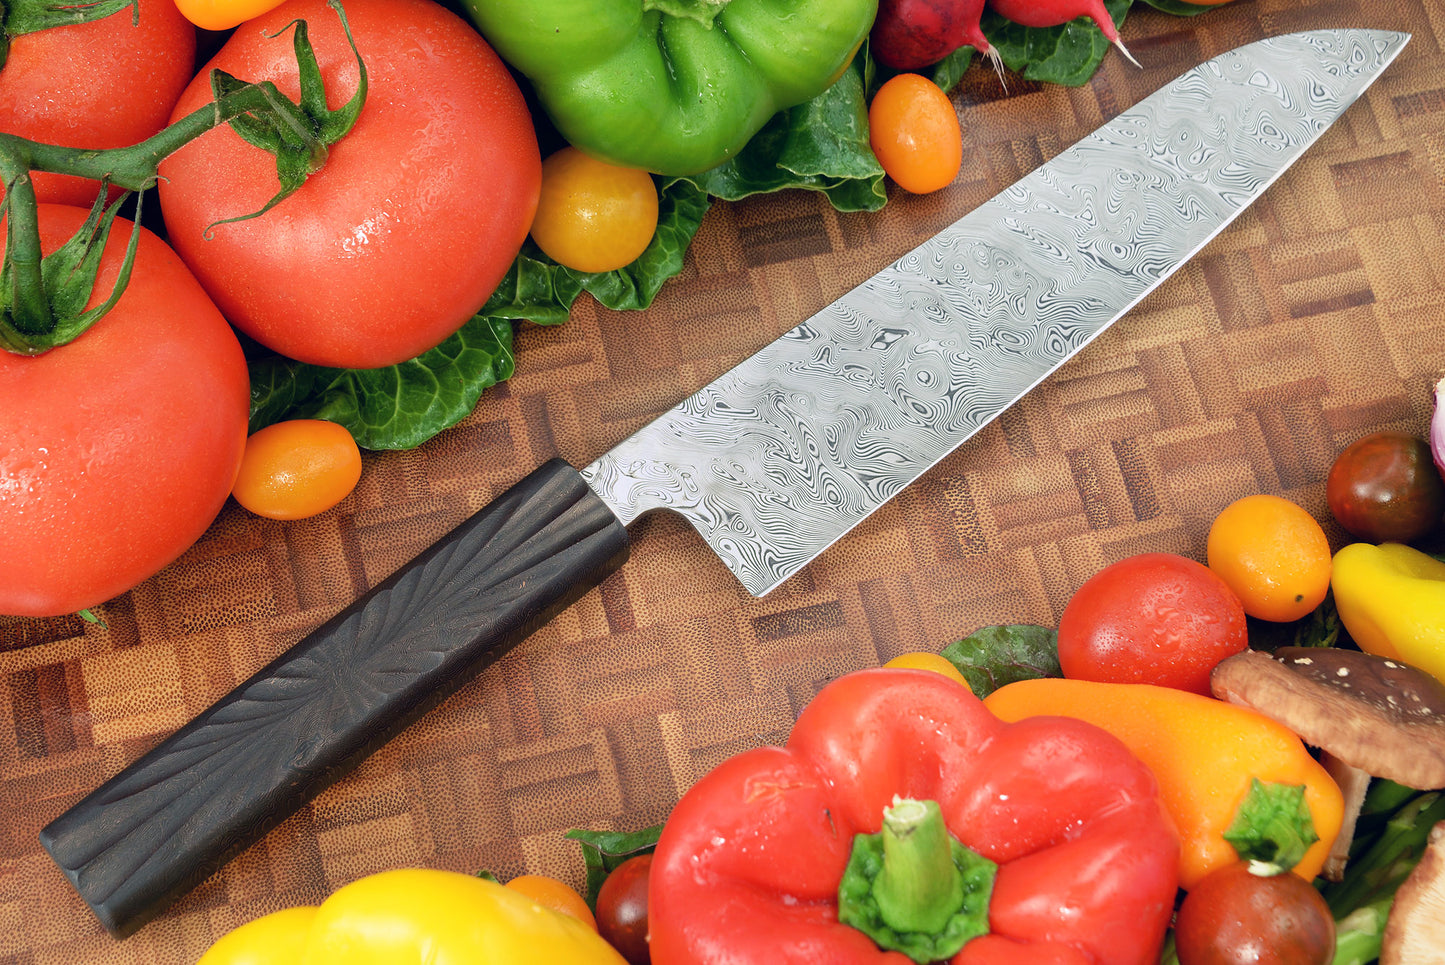 Santoku Style Kitchen Knife with Damasteel Blade and Composite Handle